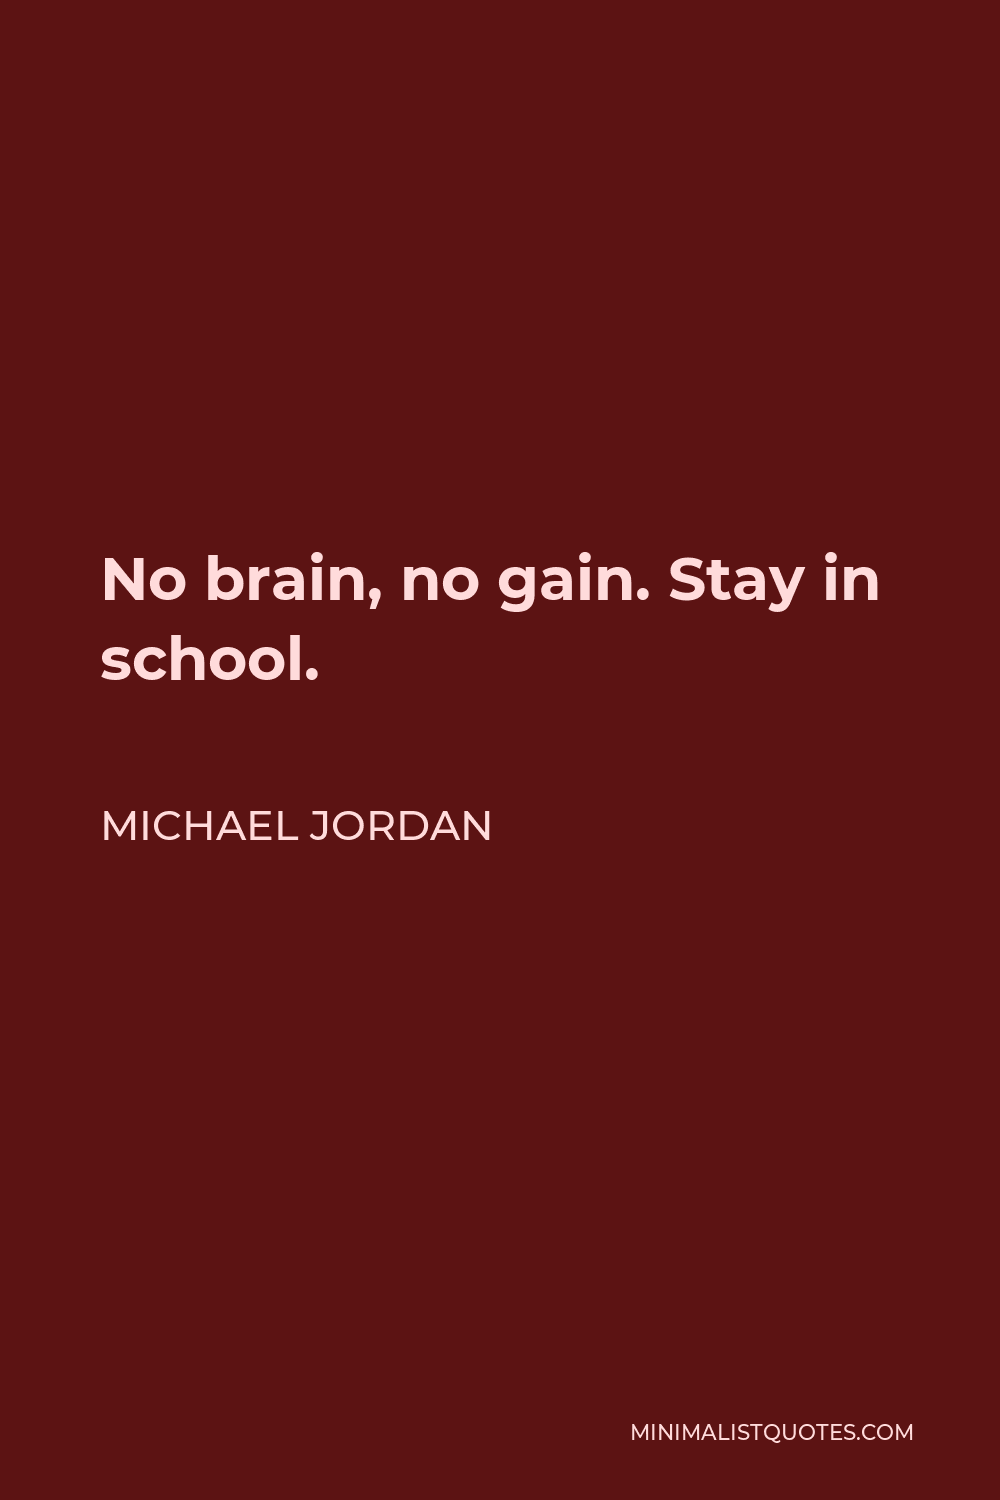 Michael Jordan Quote - No brain, no gain. Stay in school.